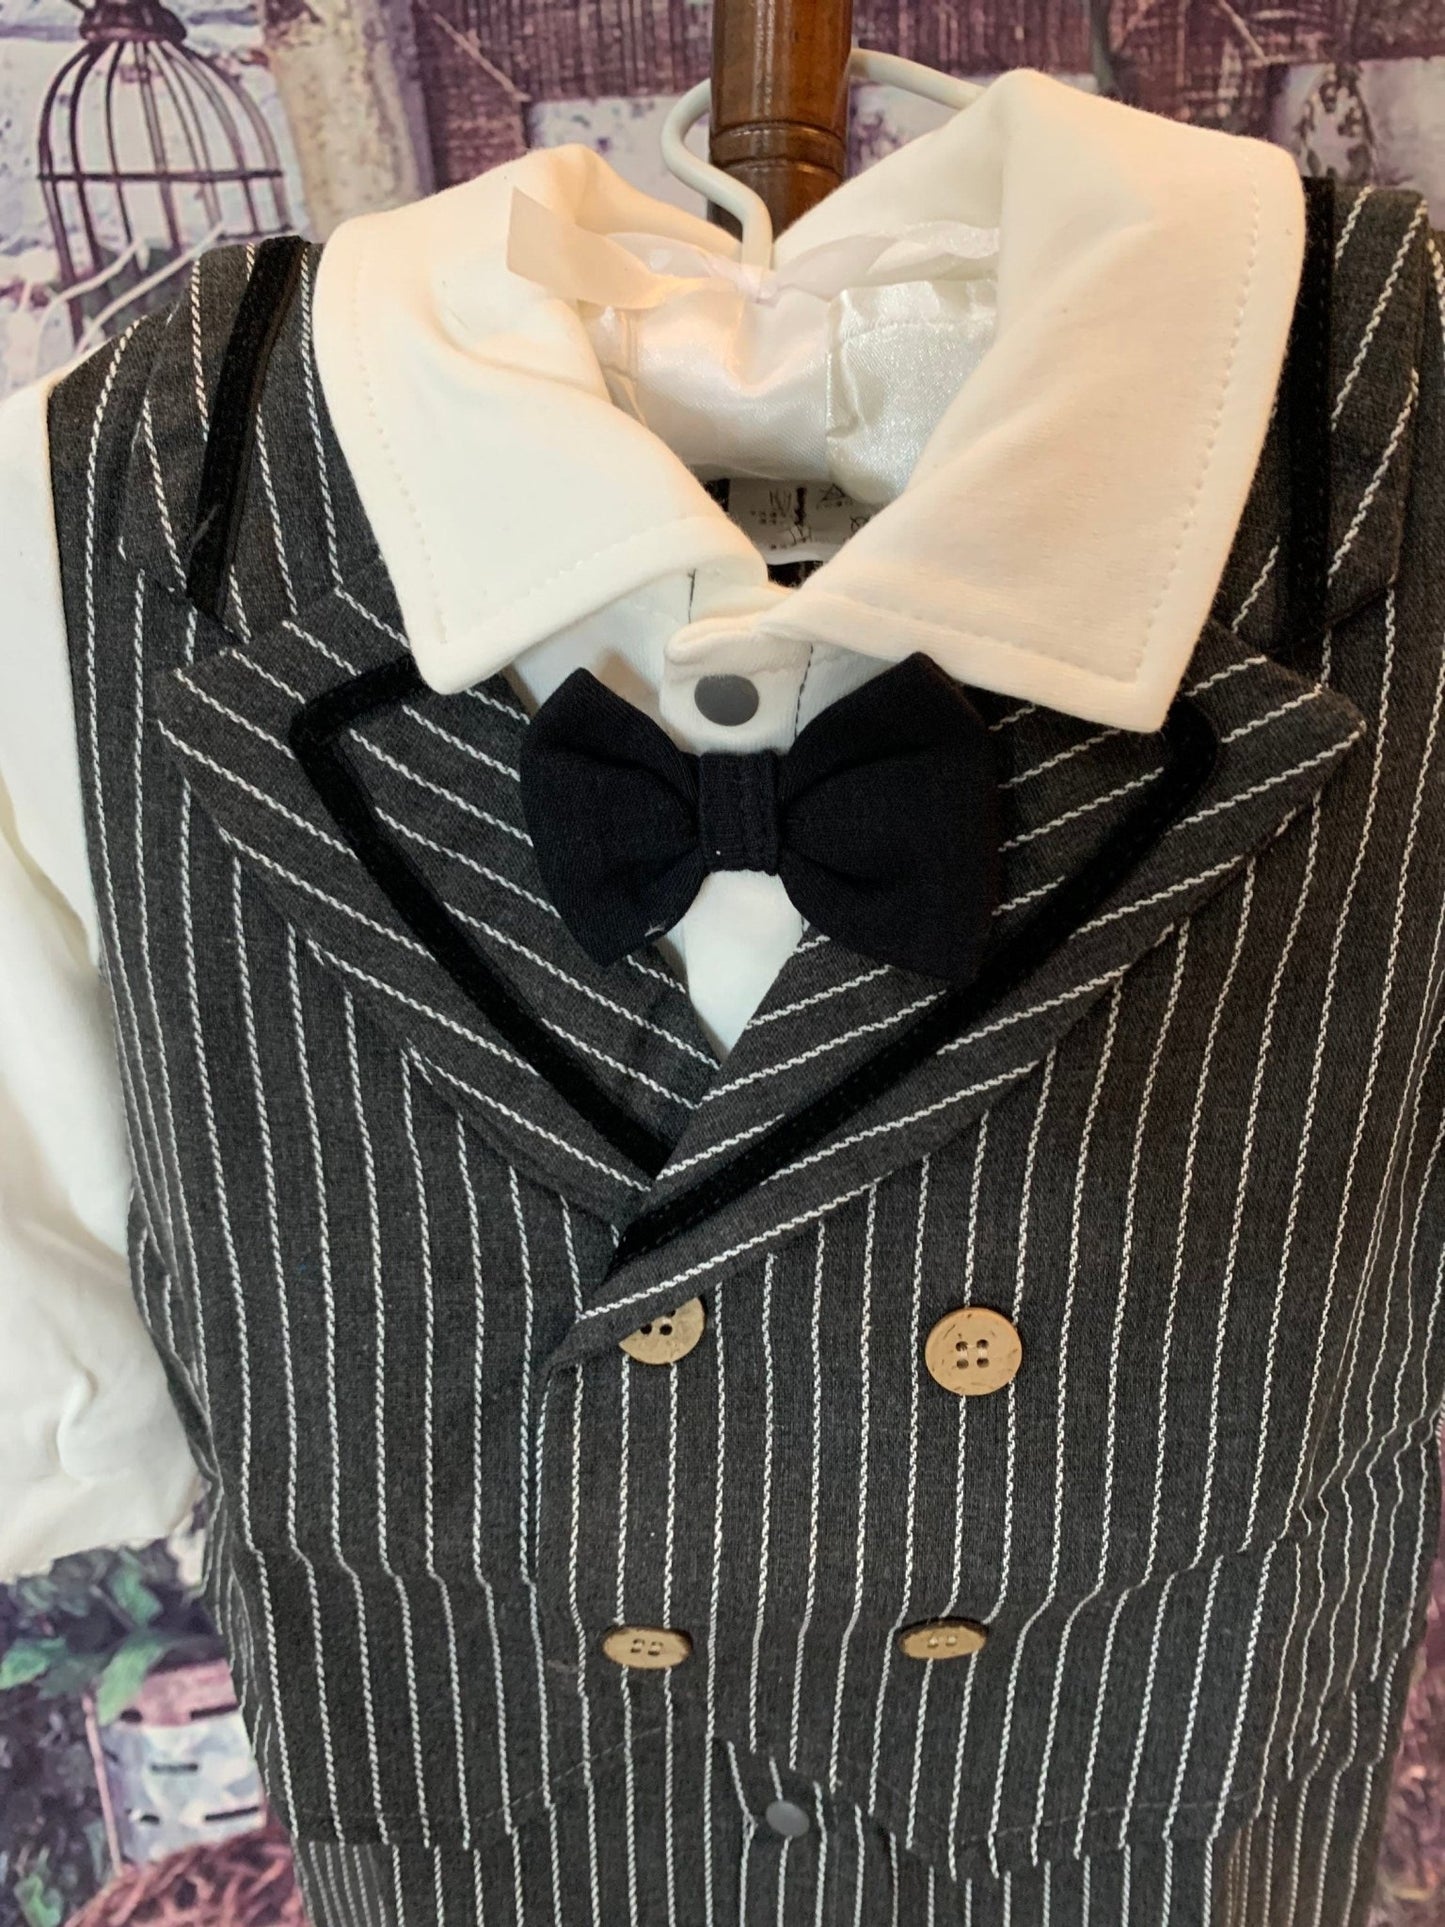 Little Gentleman Dark Gray Stripe One Piece Bow Tie Suit - TinySweetPeaBoutique